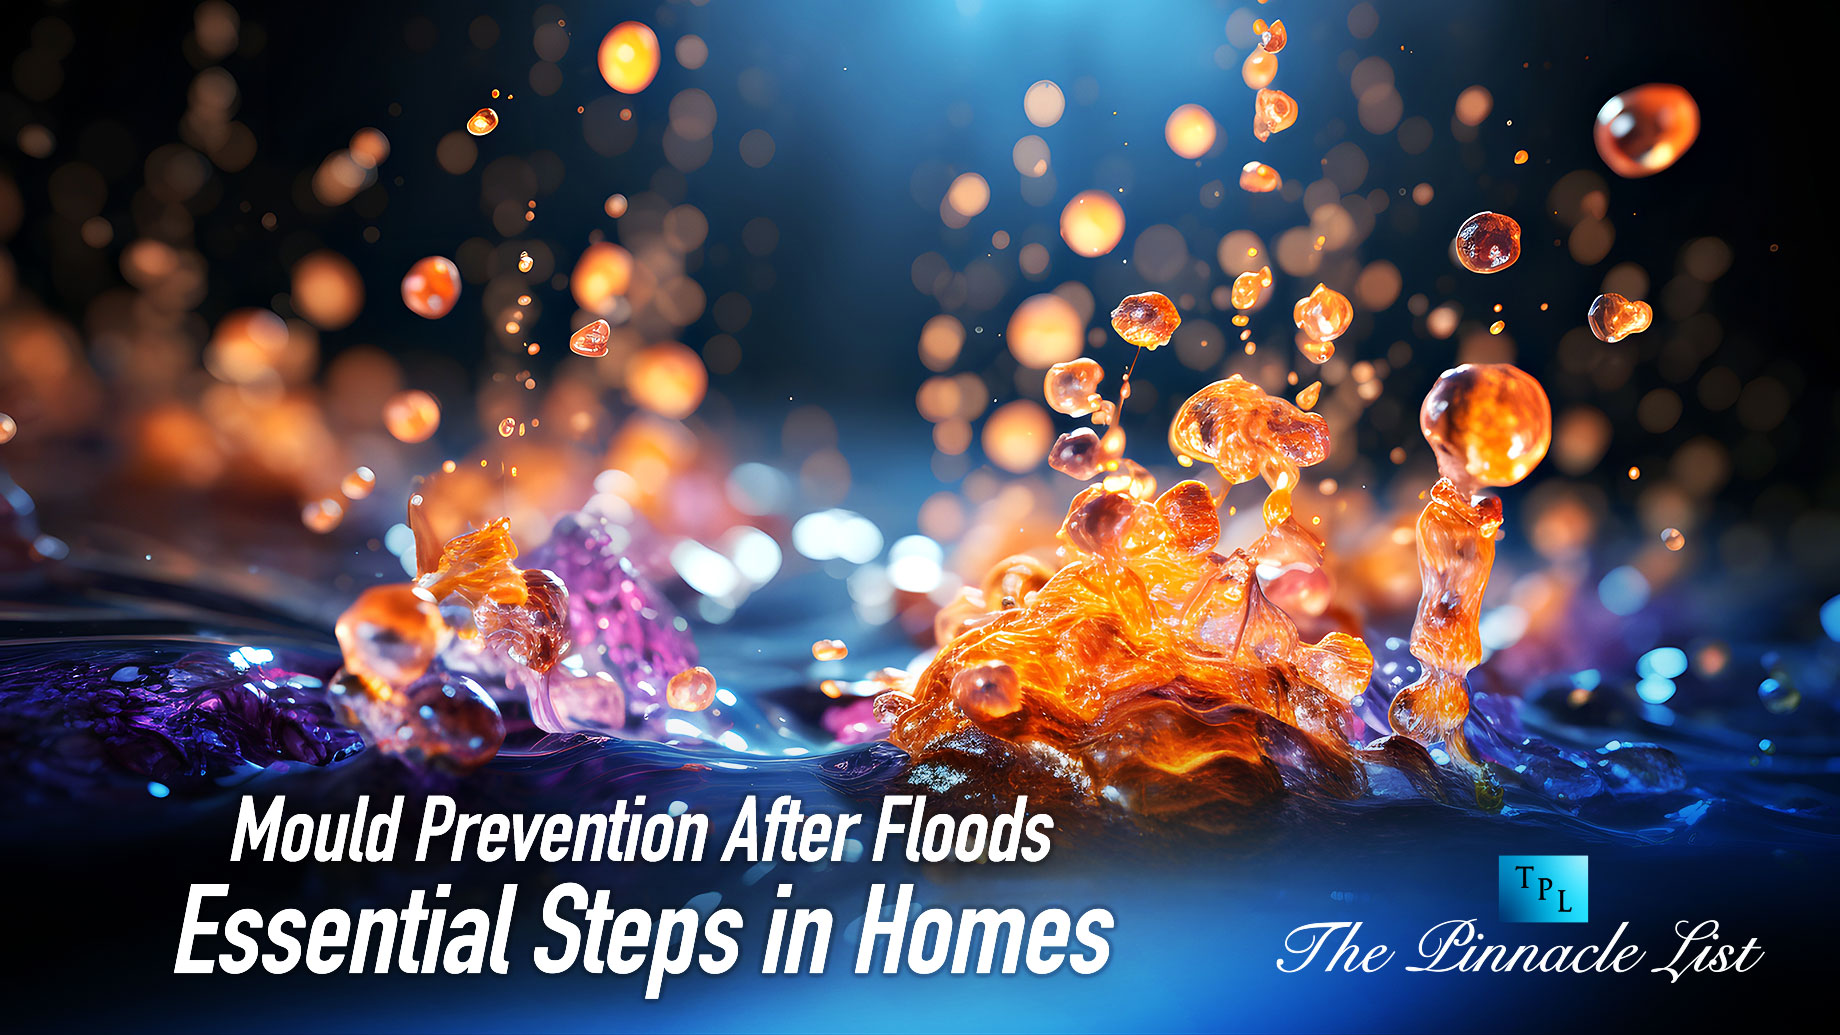 Mould Prevention After Floods: Essential Steps in Homes